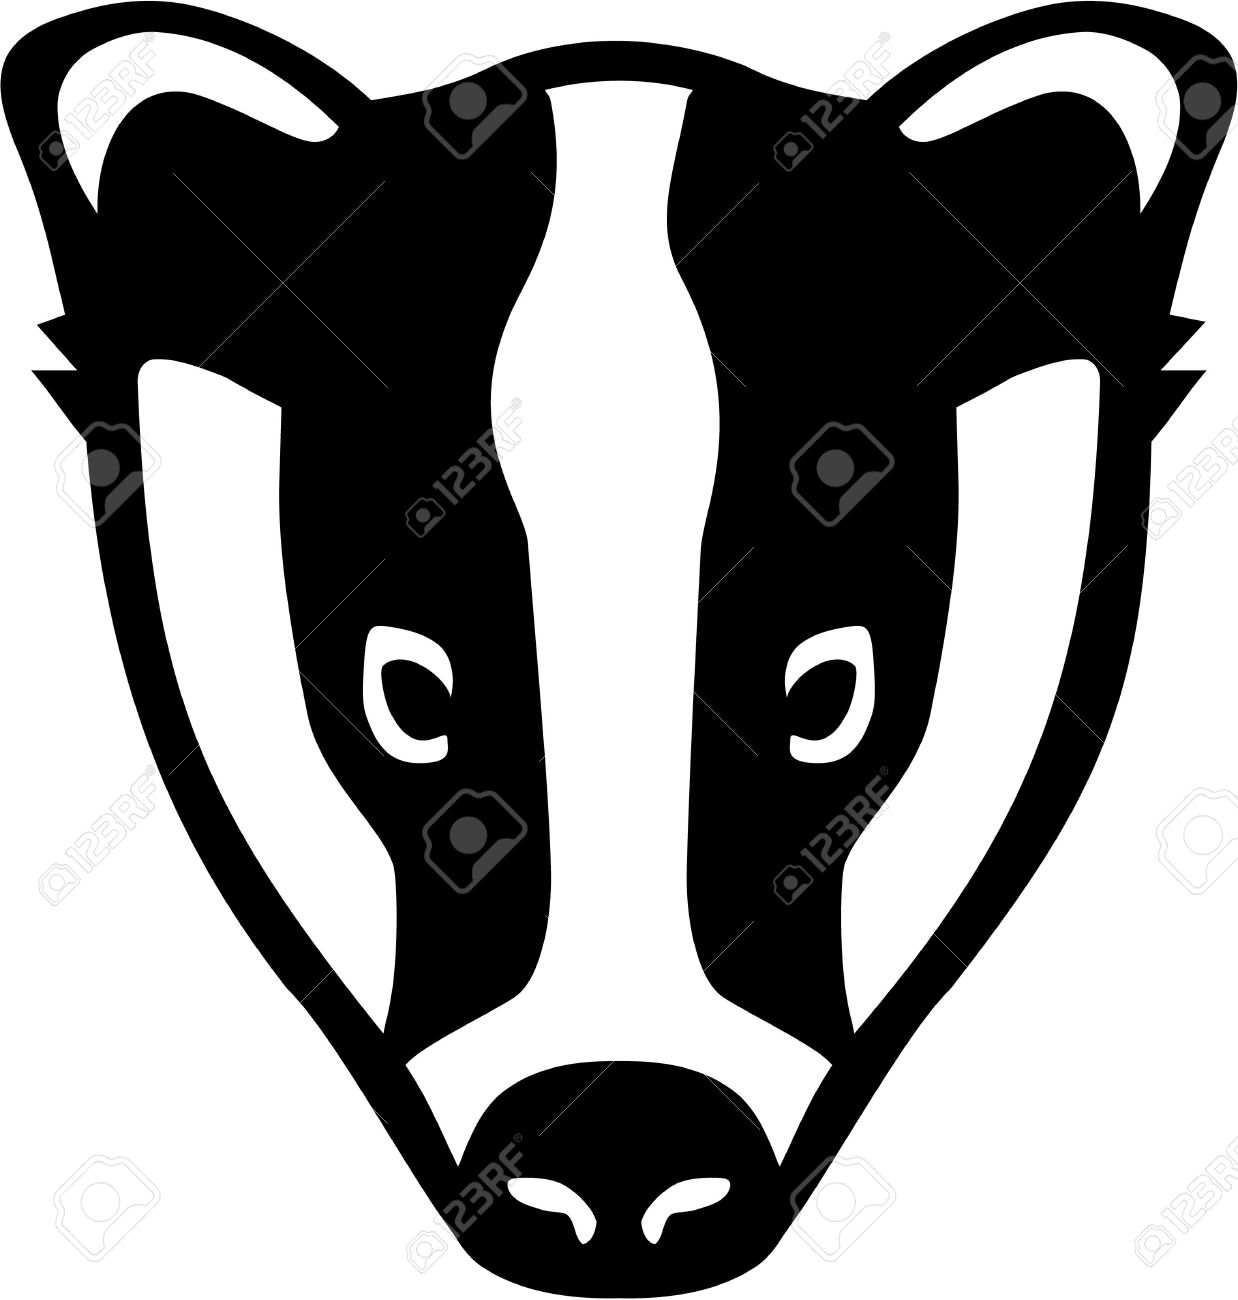 badger: Badger Head